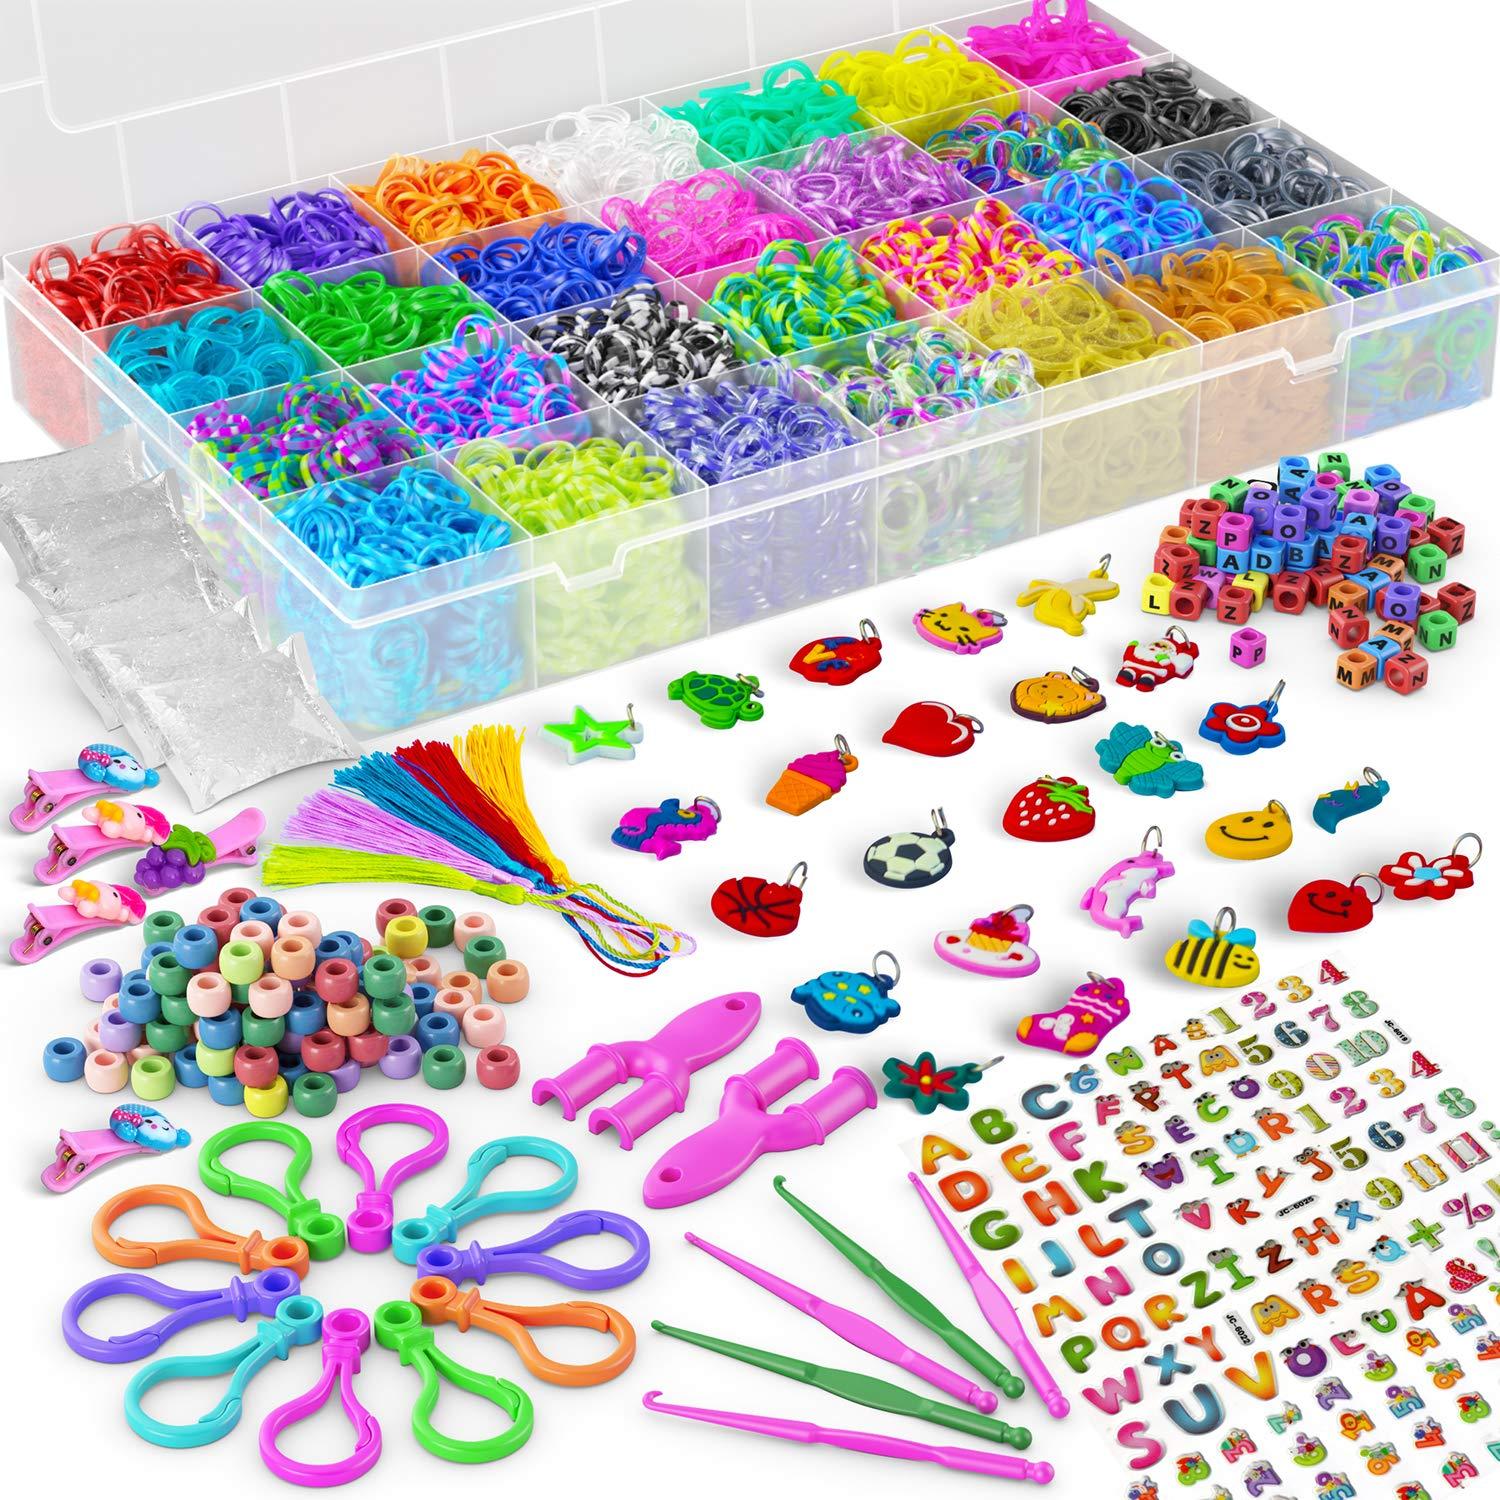 Hot Sales 1800 Pcs Rubber Bands Bracelet Kit 32 Colors Loom Bands Clips Beads Diy Set